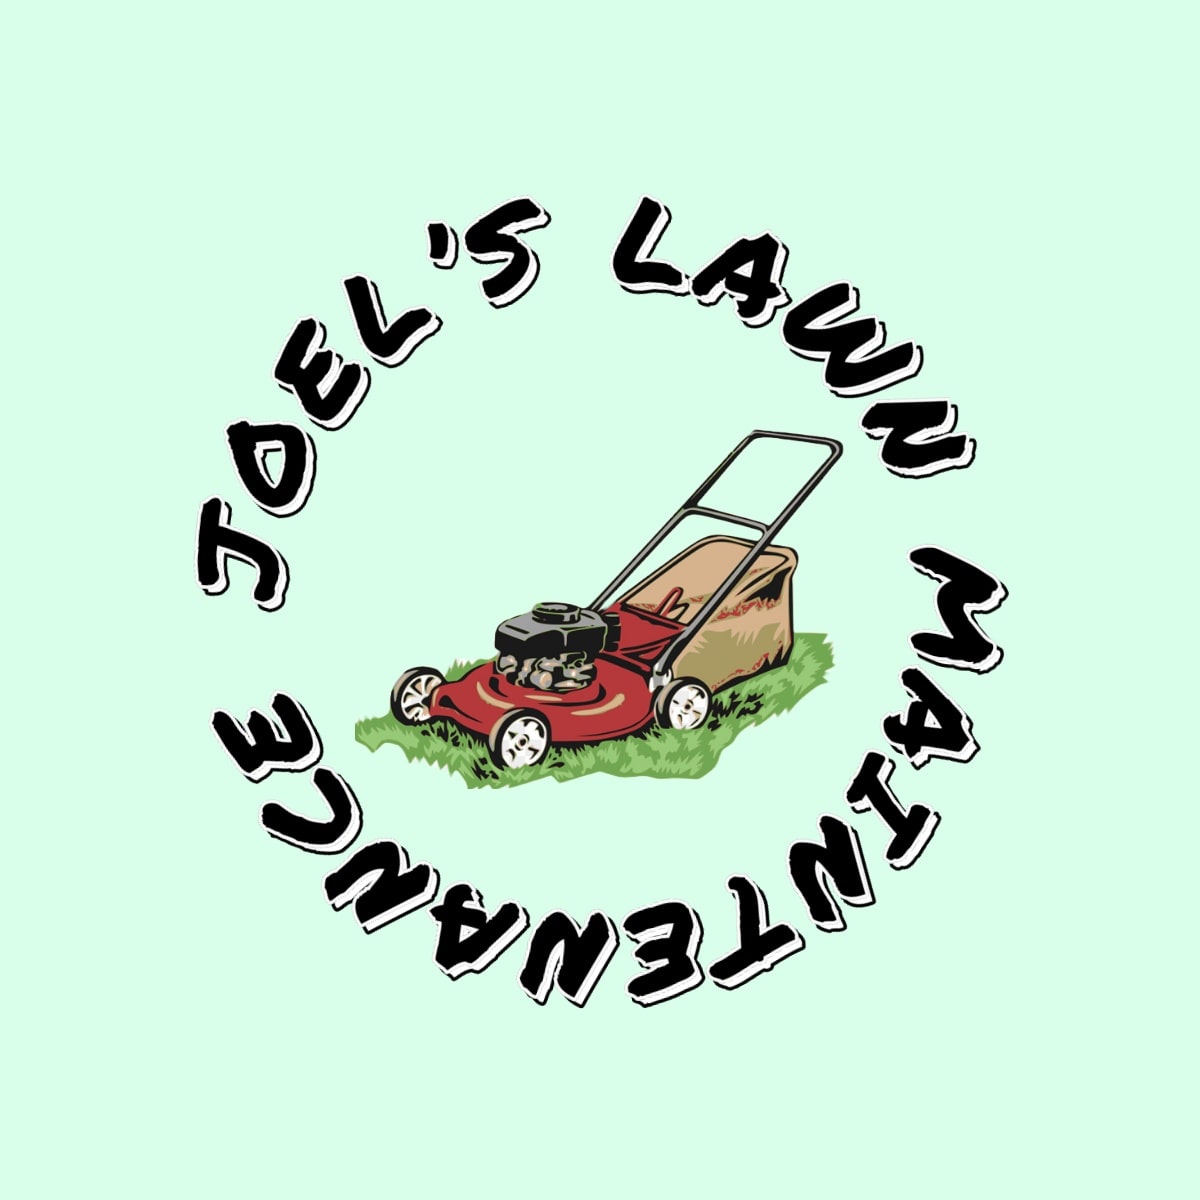 Joel's Lawn Care Maintenance - Unlicensed Contractor Logo